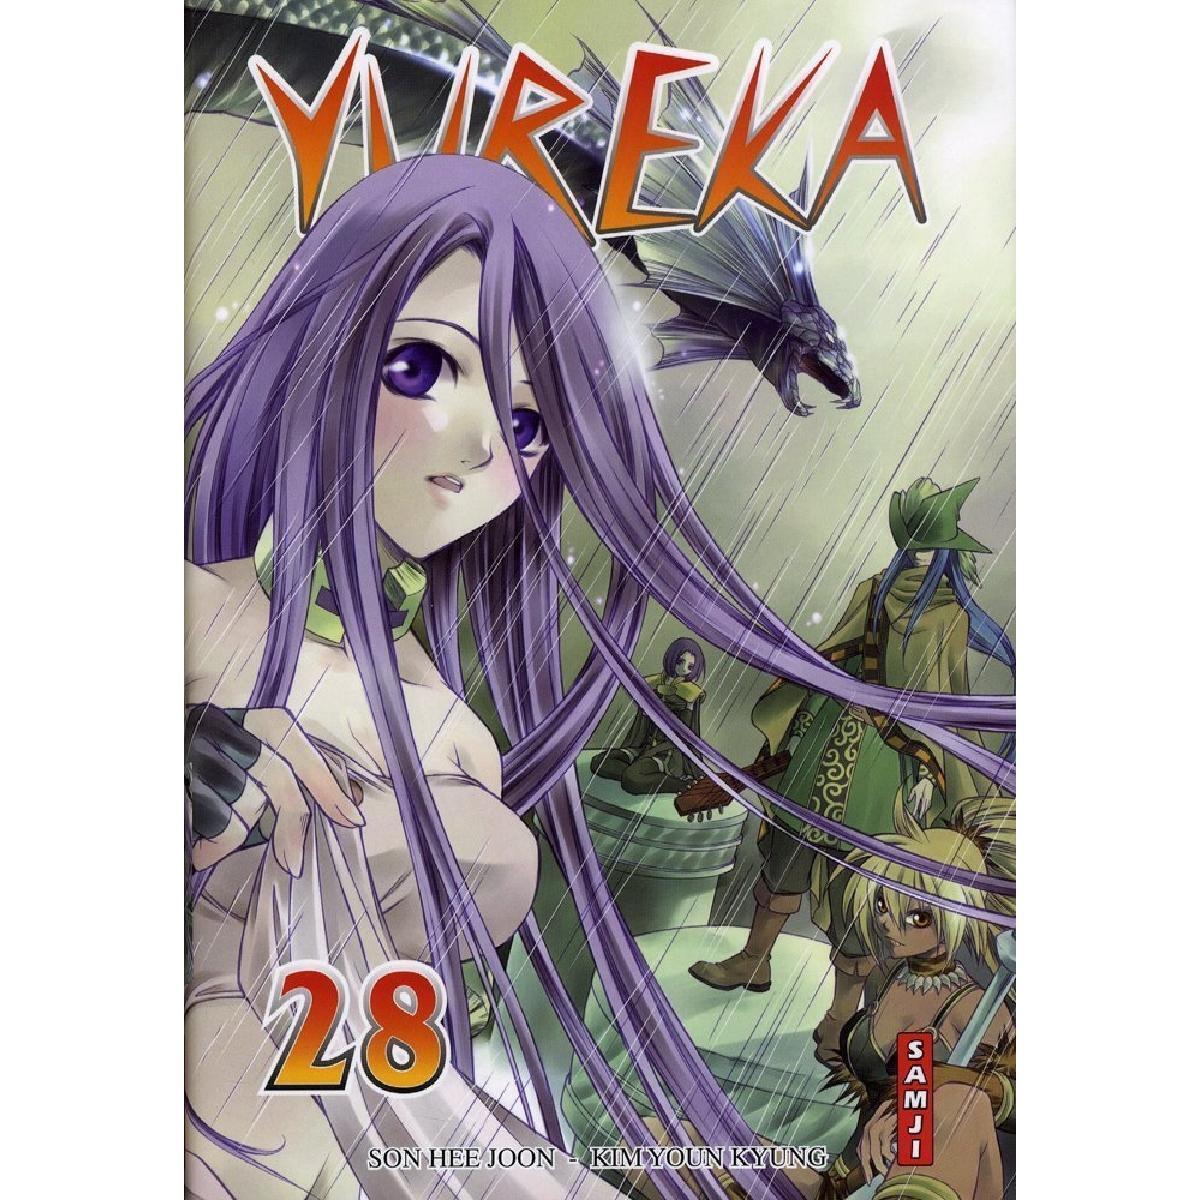 Manga Yureka Tome 28 - Editions Tokebi